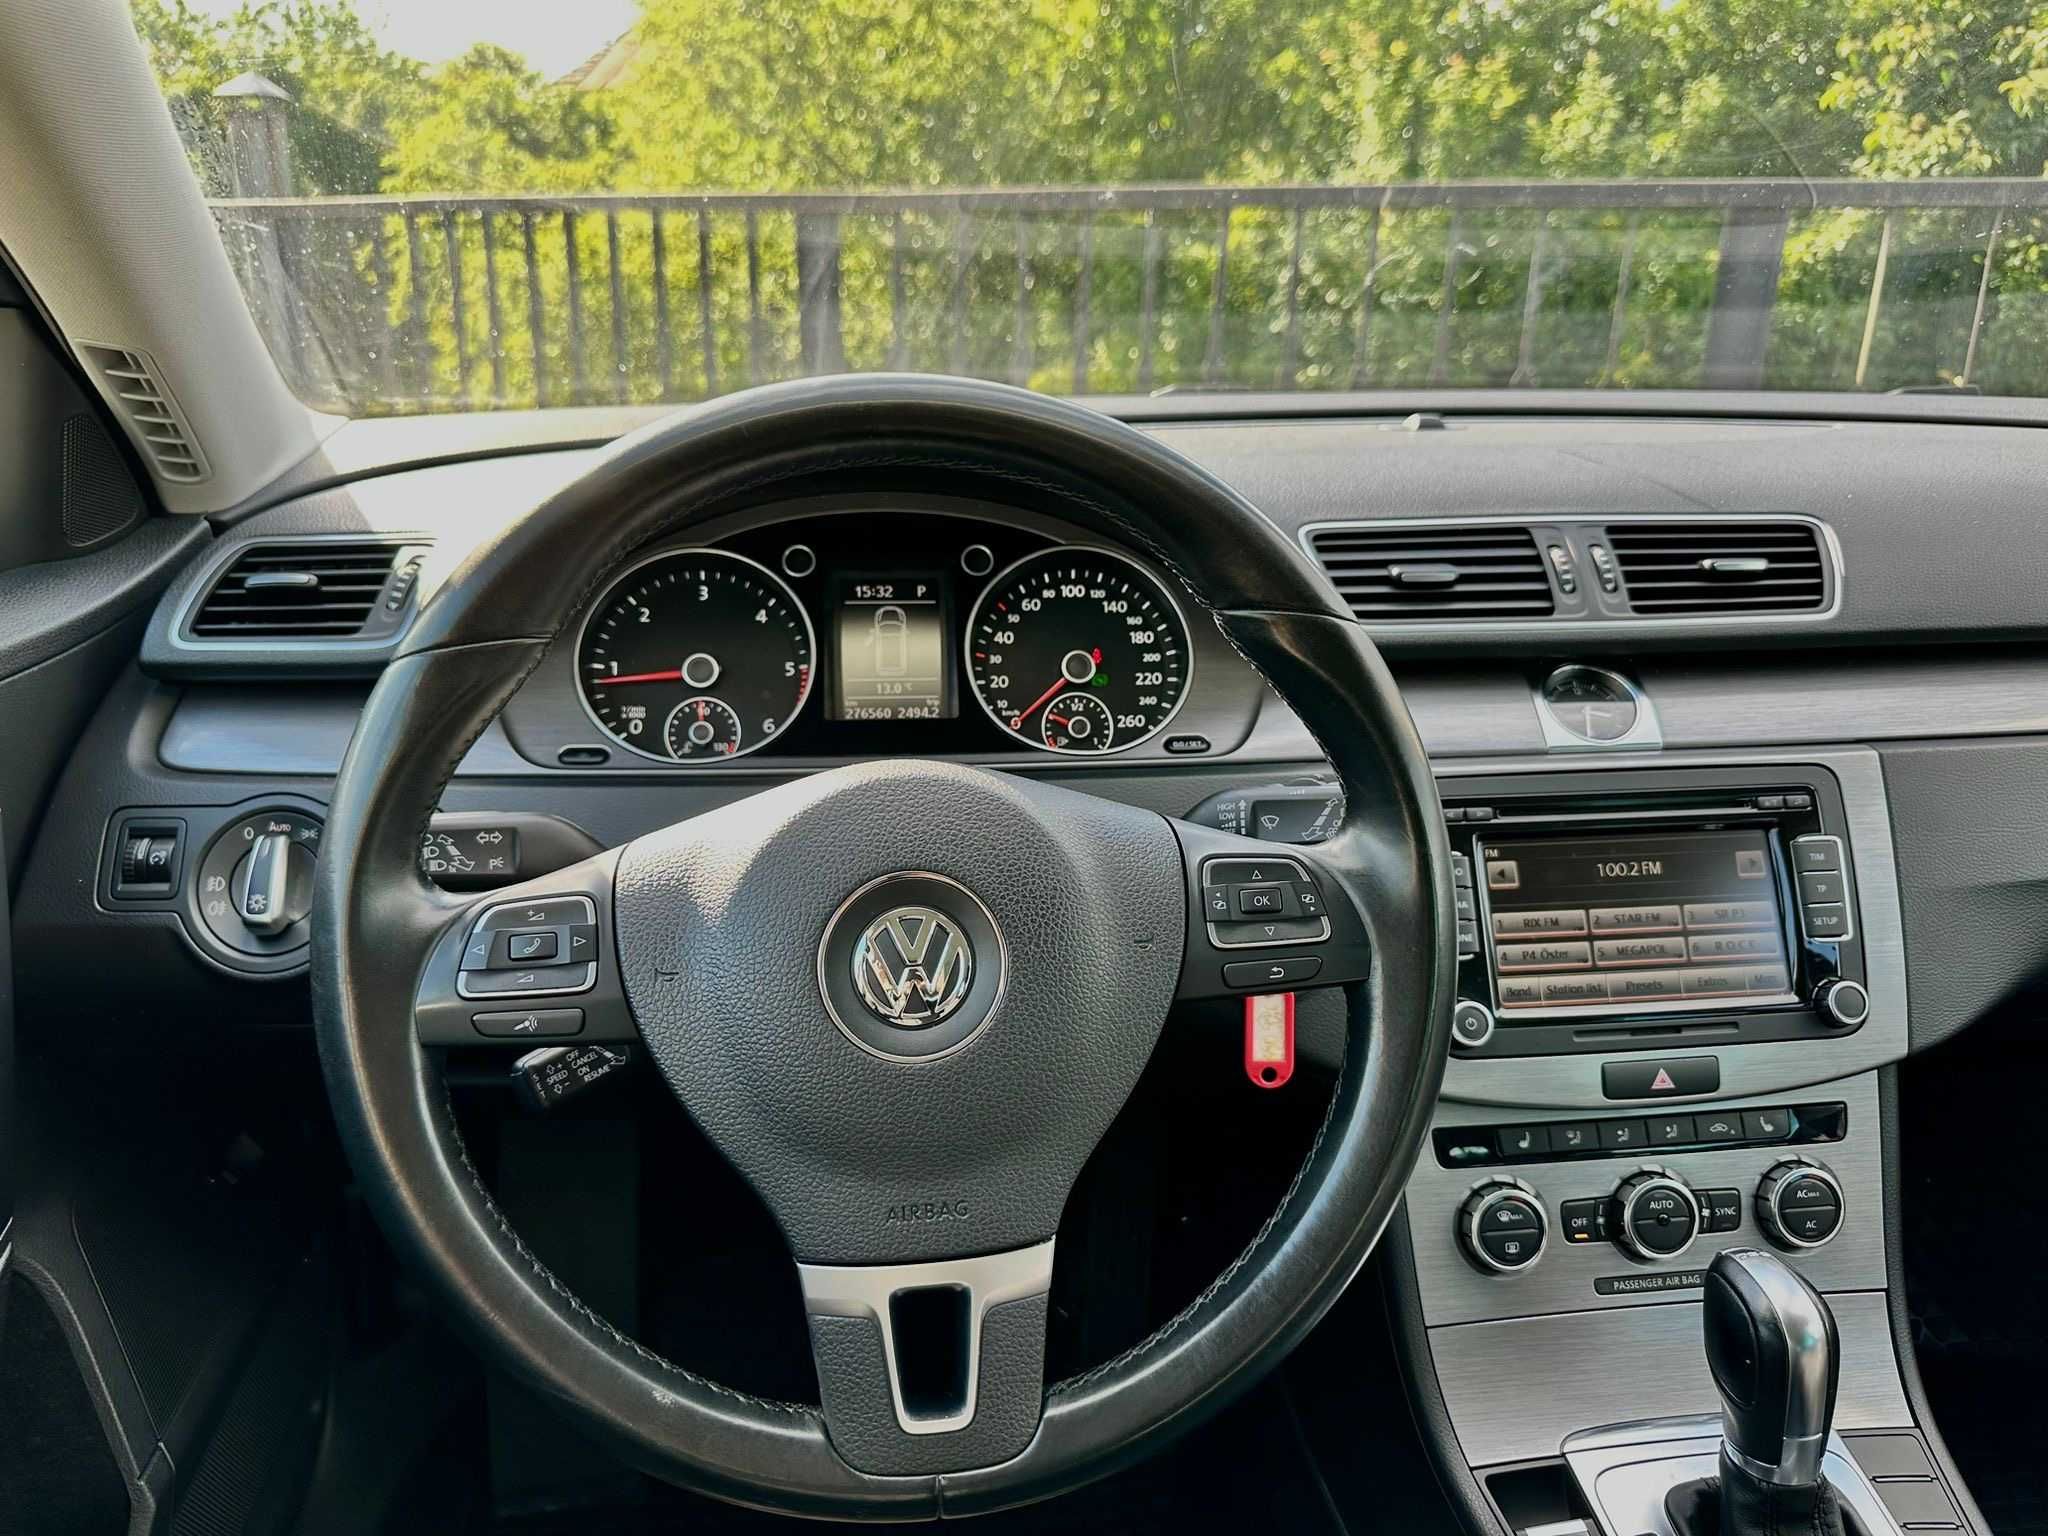 Volkswagen Passat 2.0 TDI high line 4motion 2012